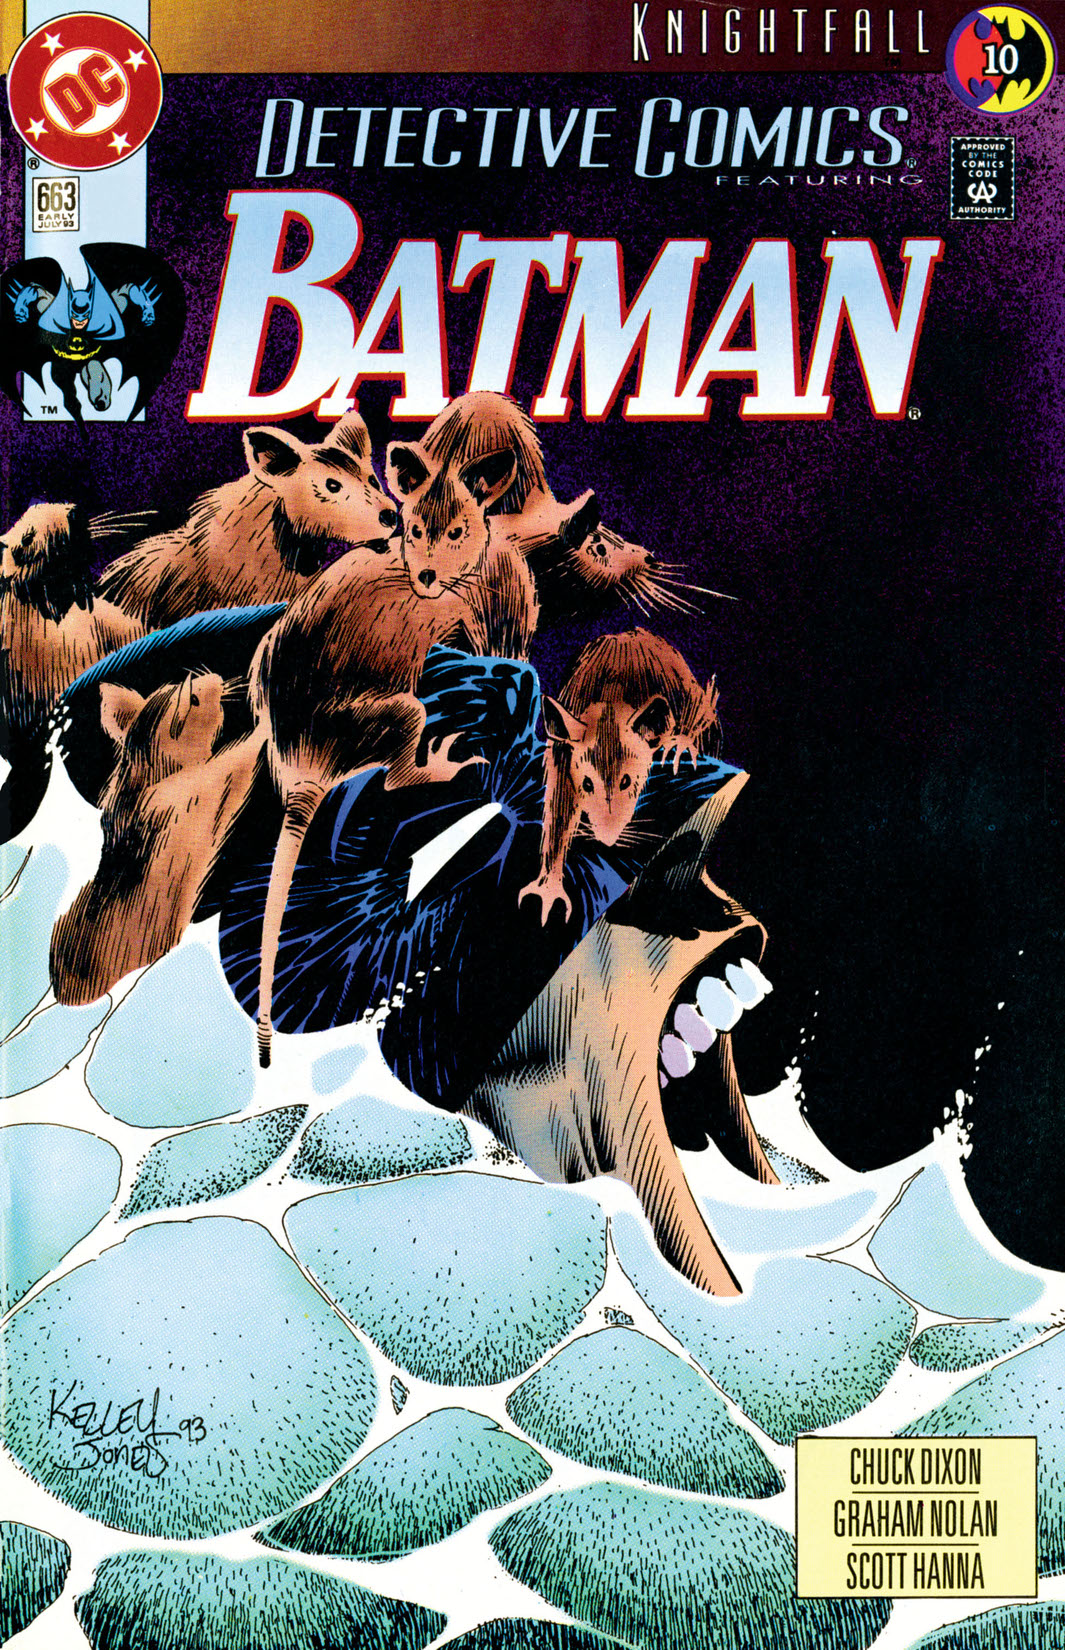 Detective Comics (1937-) #663 preview images